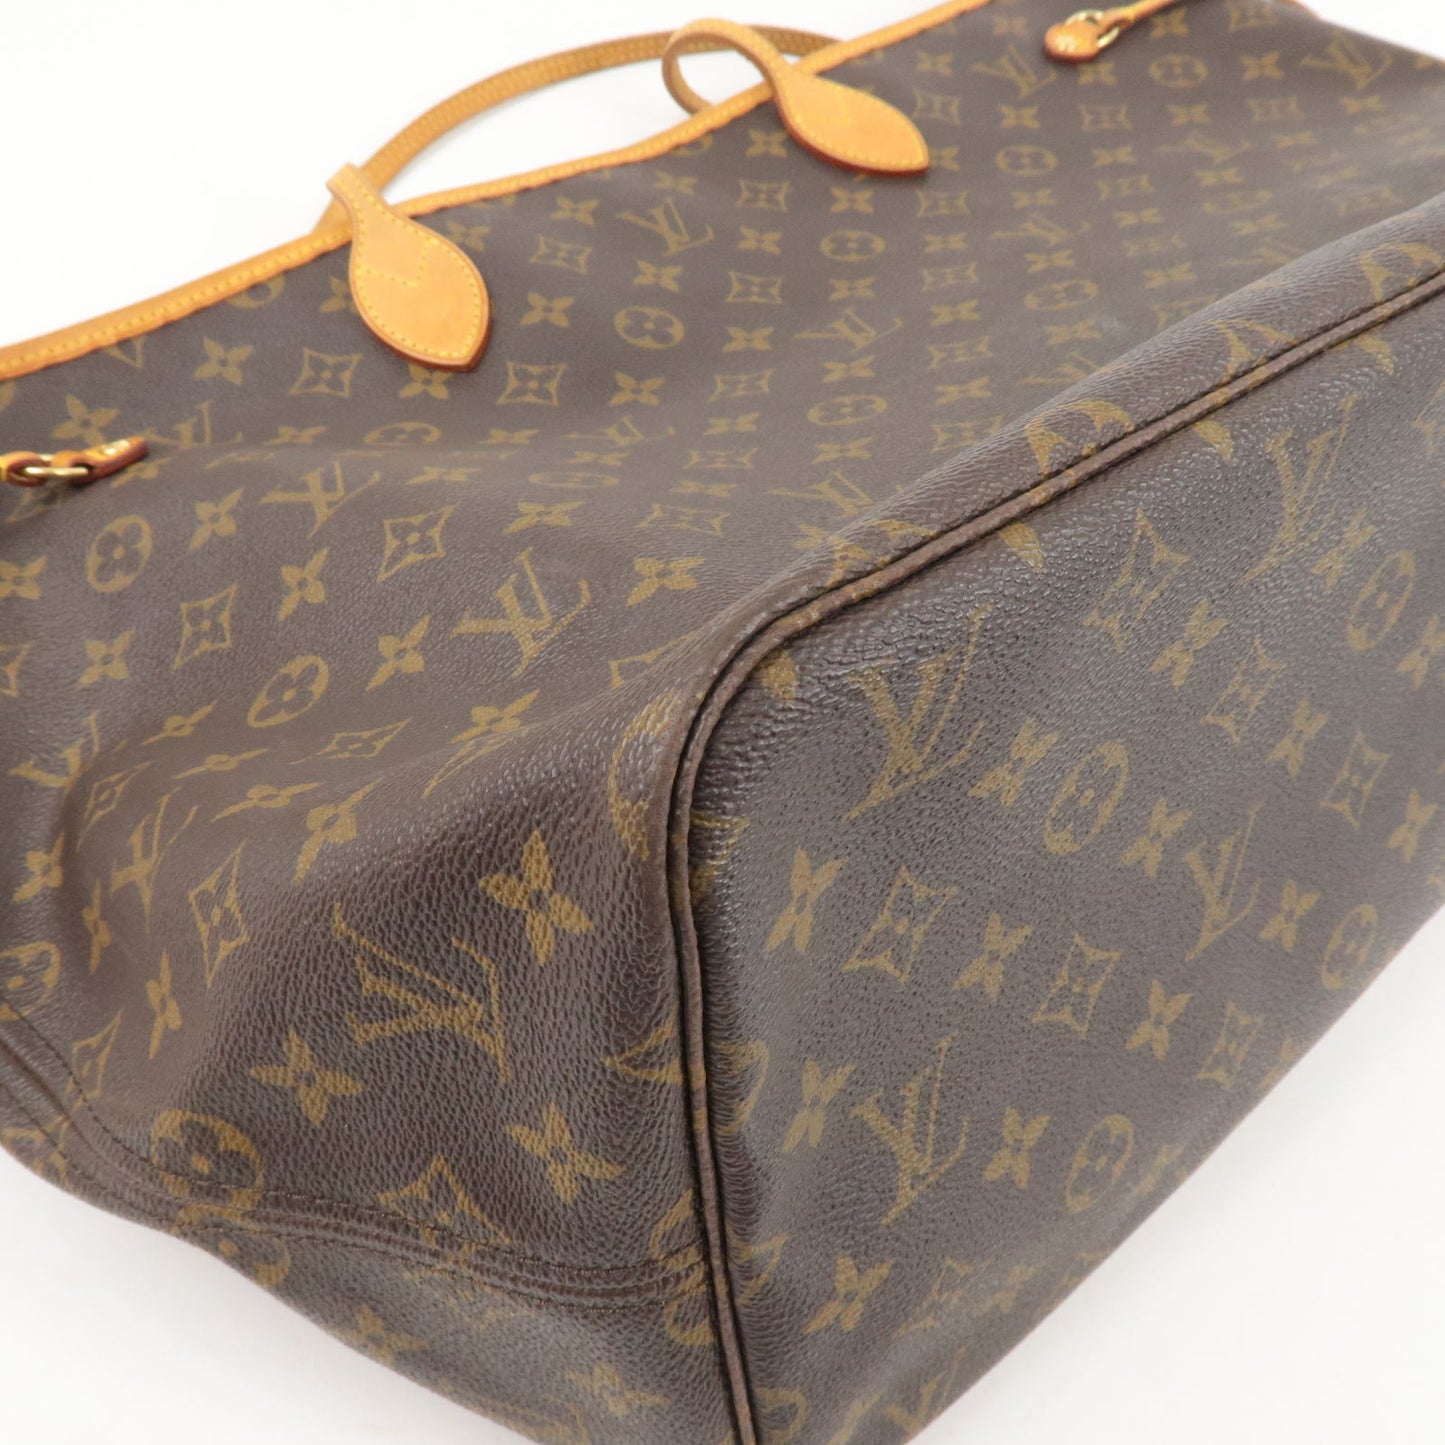 Louis-Vuitton-Monogram-Neverfull-GM-Tote-Bag-Hand-Bag-M40157